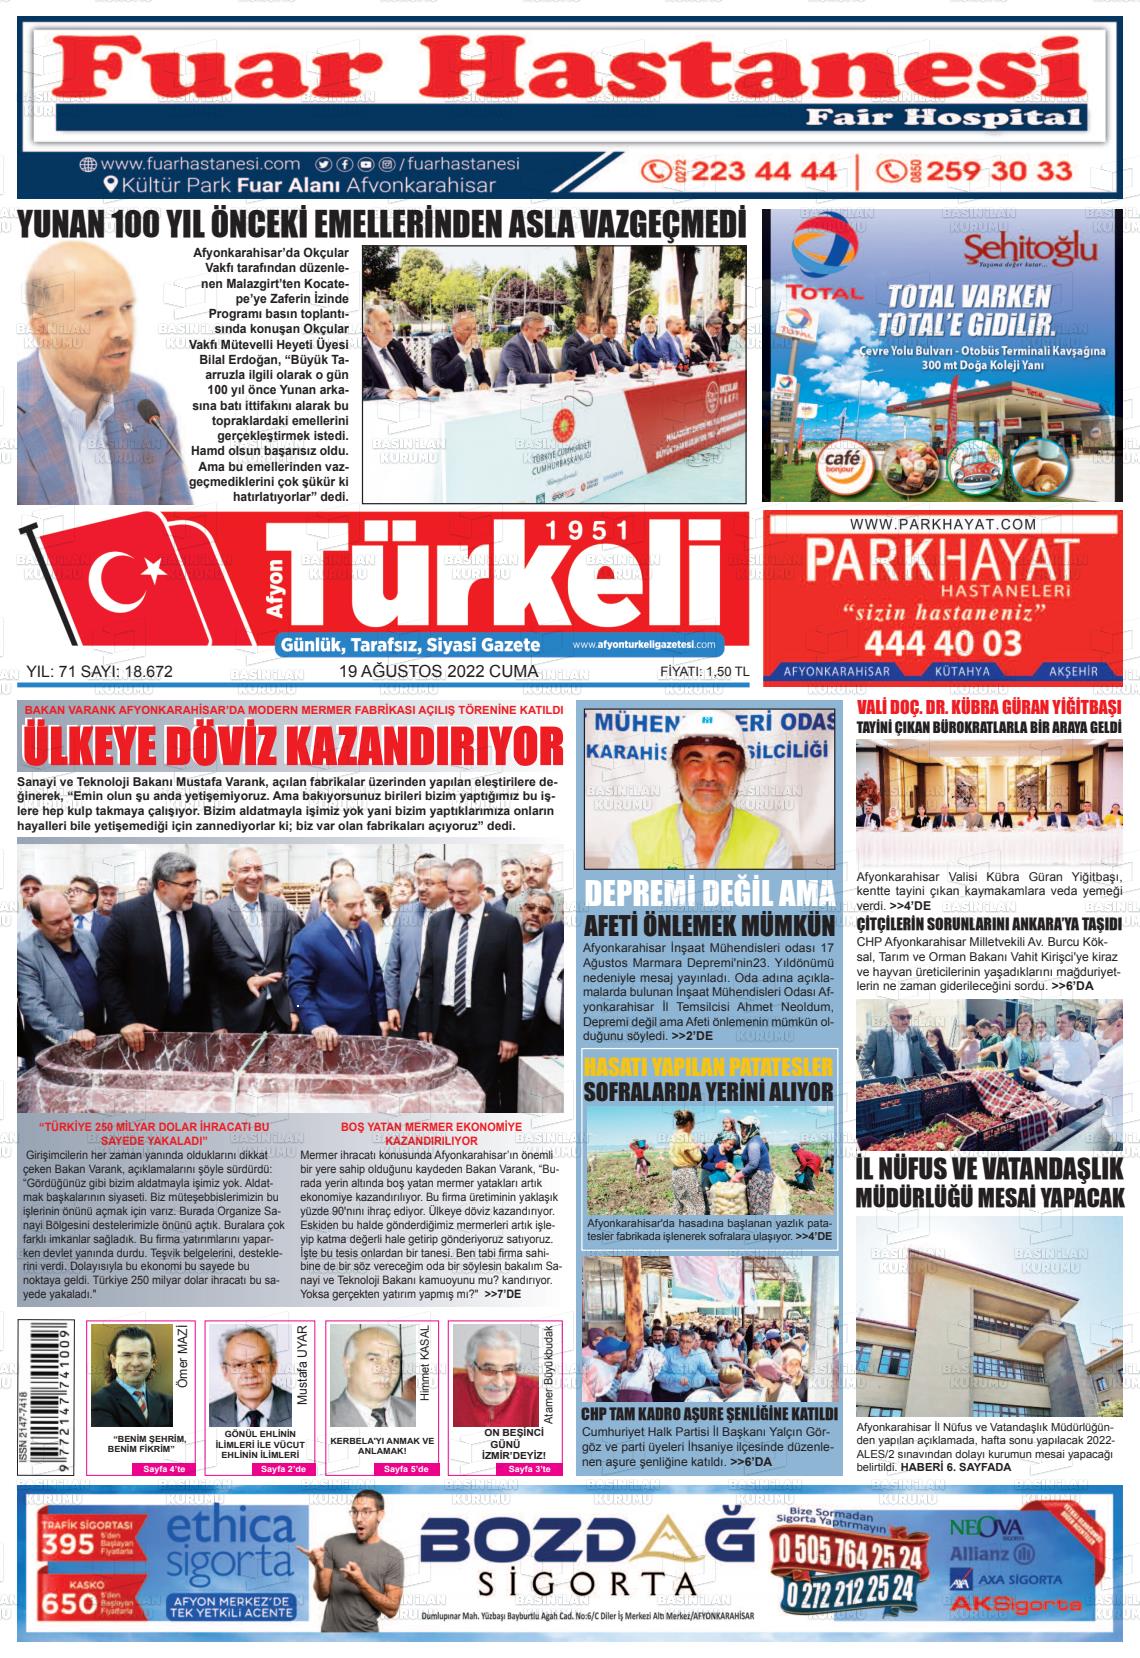 19 Ağustos 2022 Afyon Türkeli Gazete Manşeti